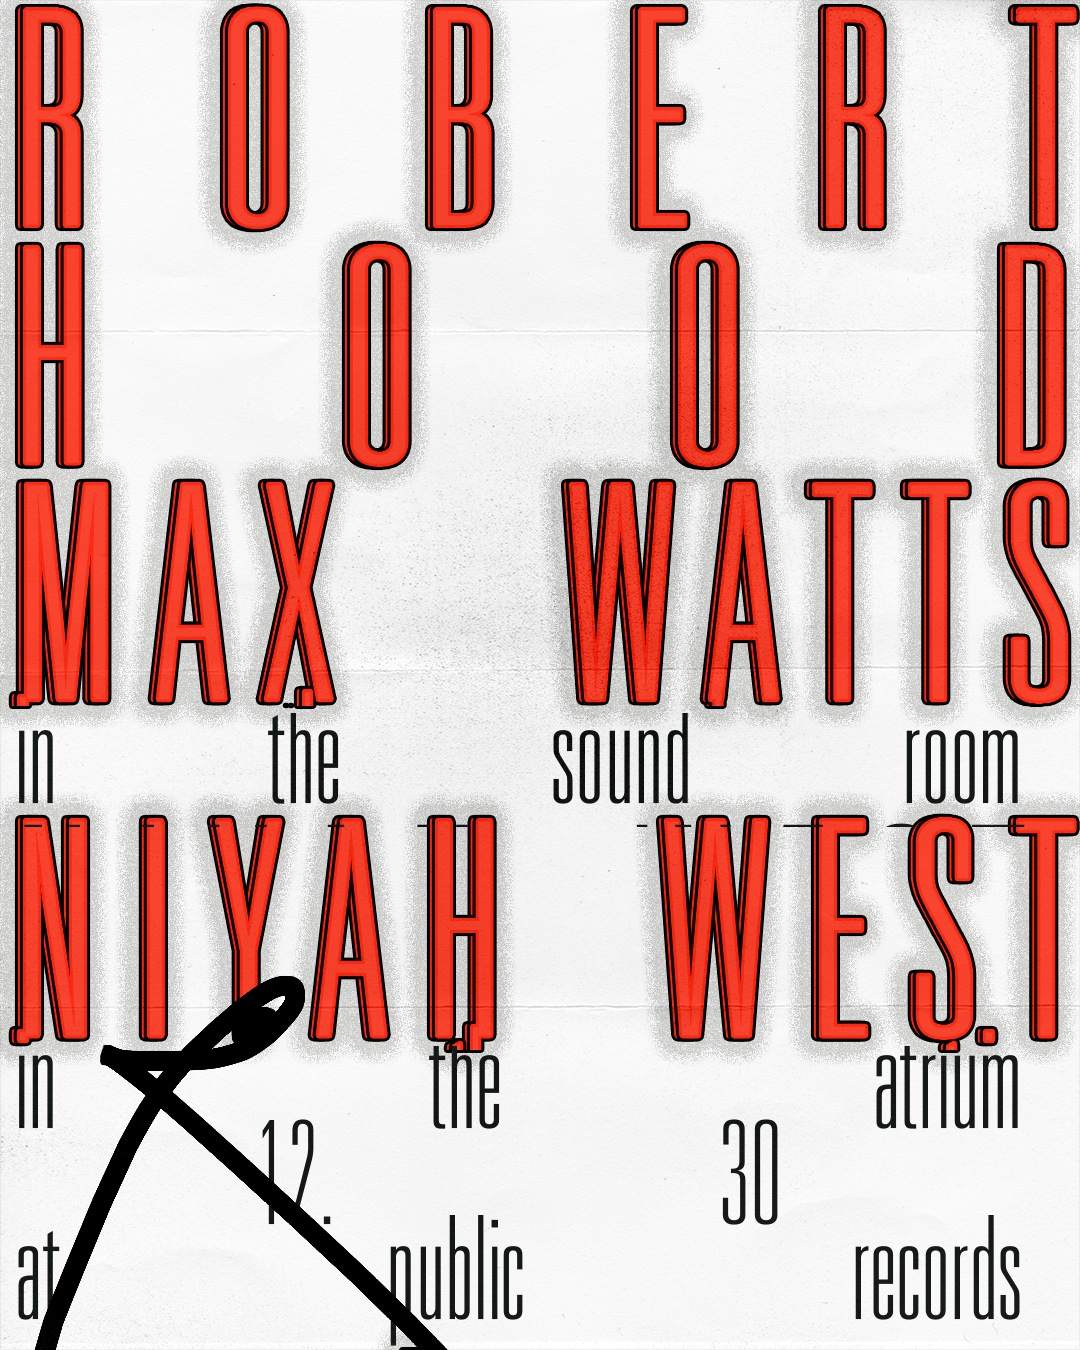 Robert Hood + Max Watts / Niyah West  - フライヤー表